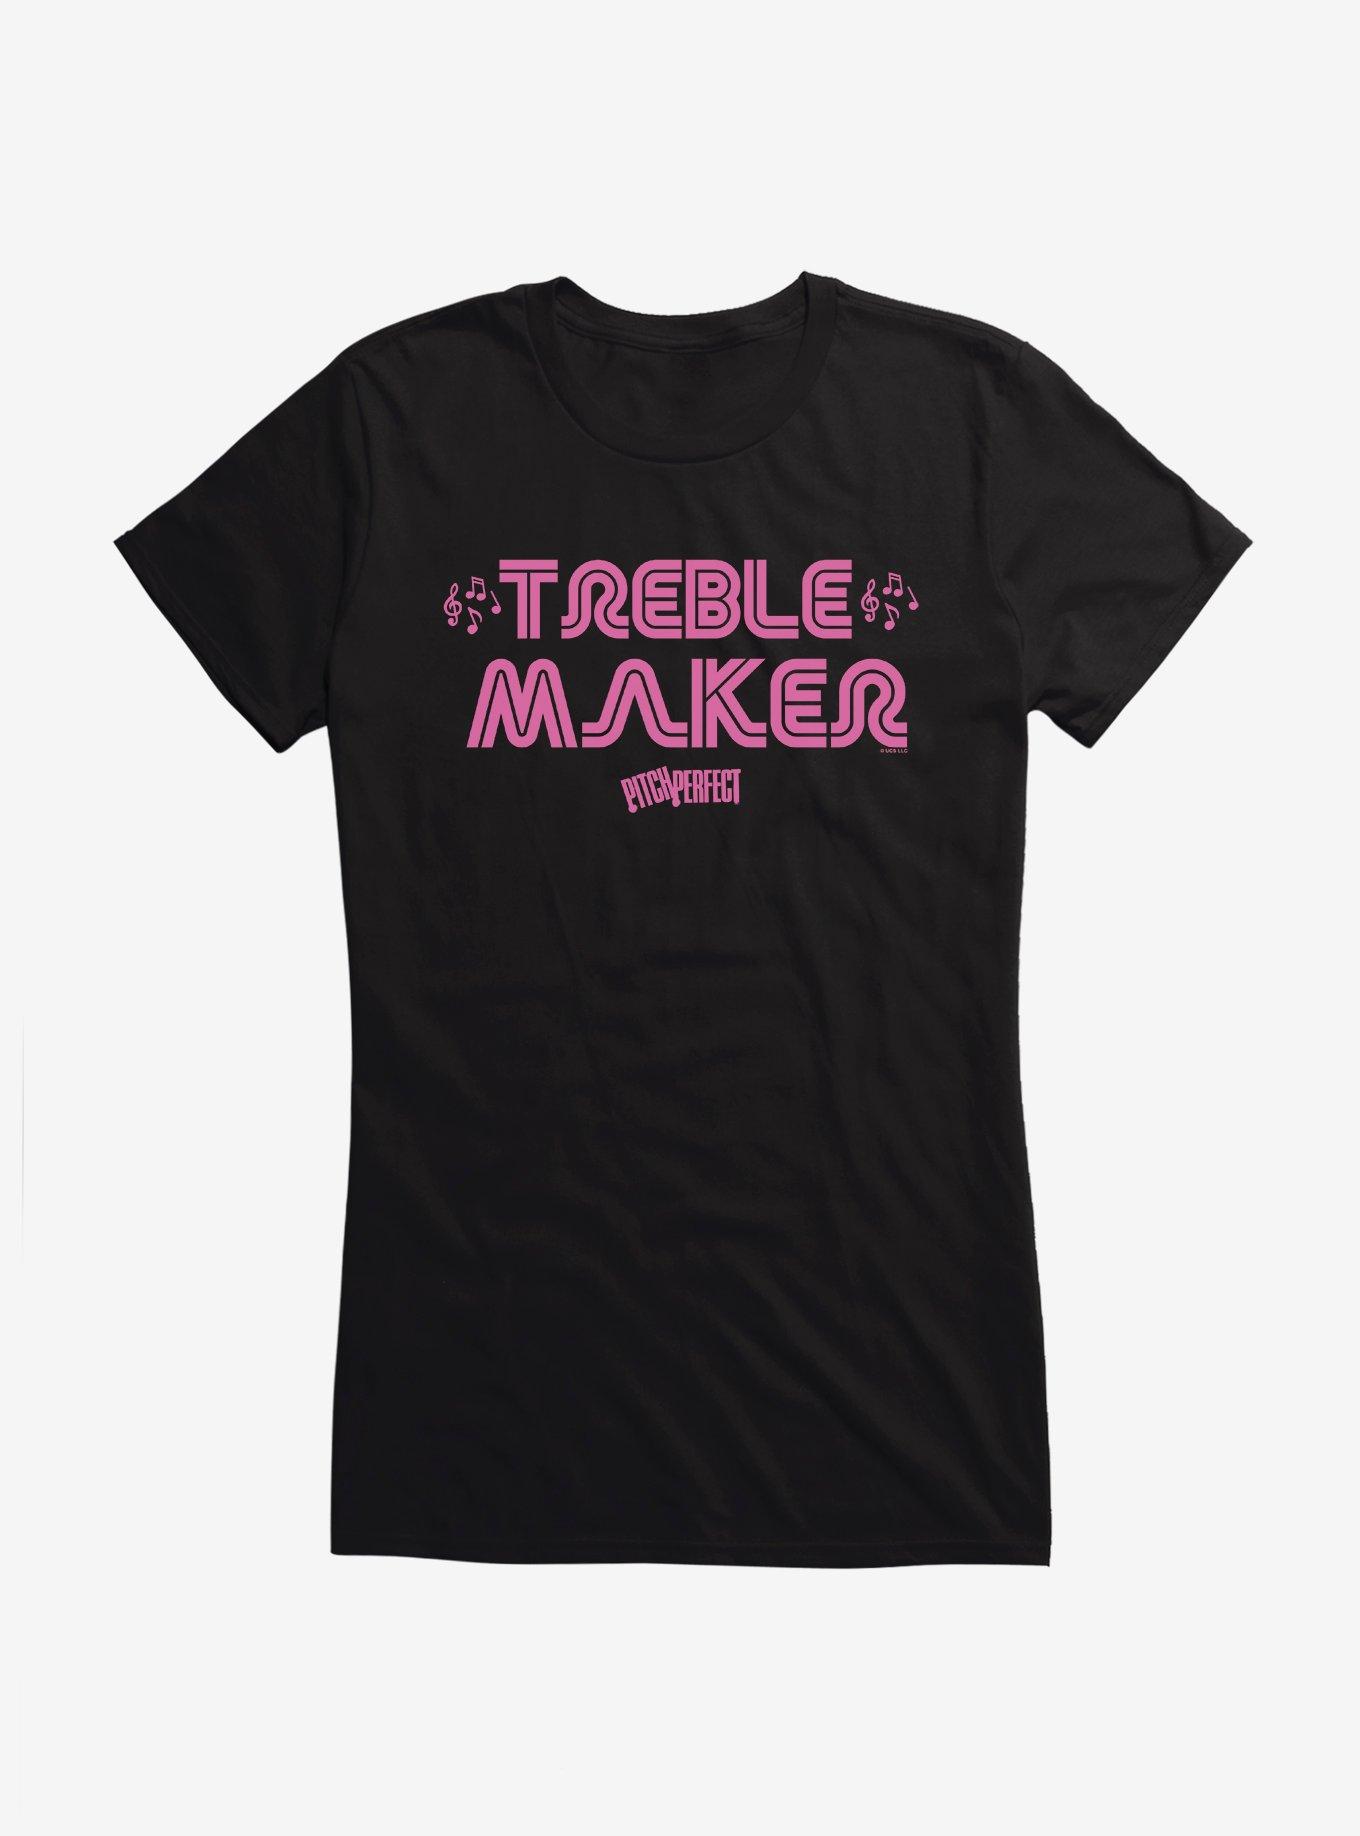 Pitch Perfect Treble Maker Girls T-Shirt